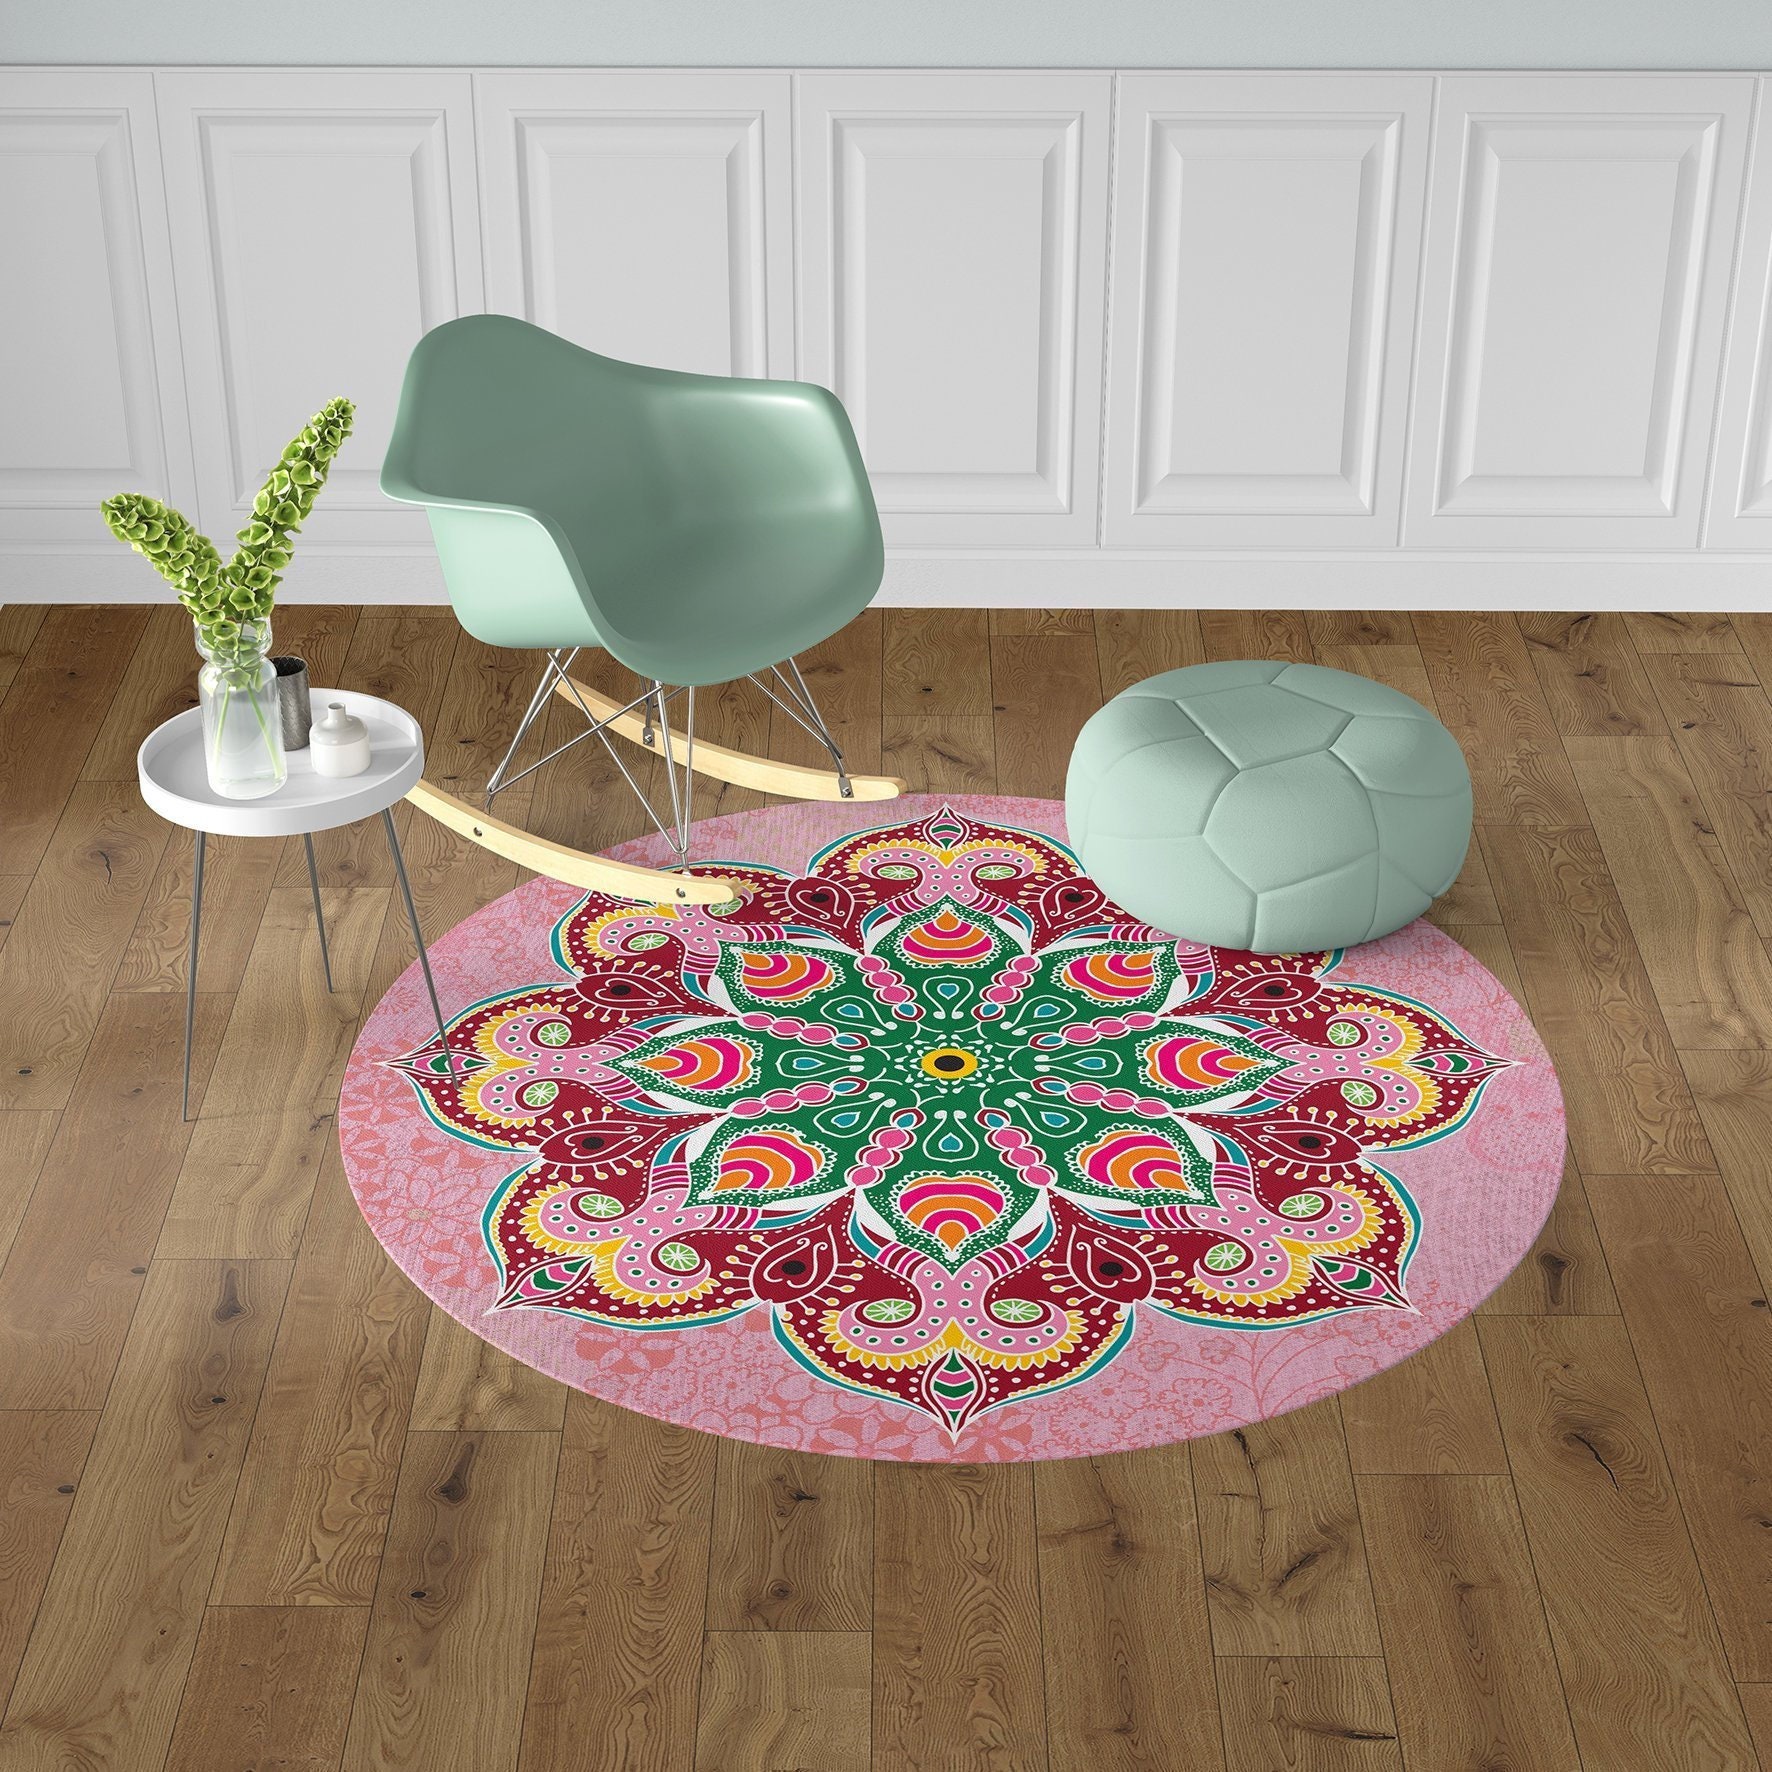 Mandala Lotus Home Bedroom Yoga Carpet Non-Slip Bathroom Rug Mat Round Floor Mat 